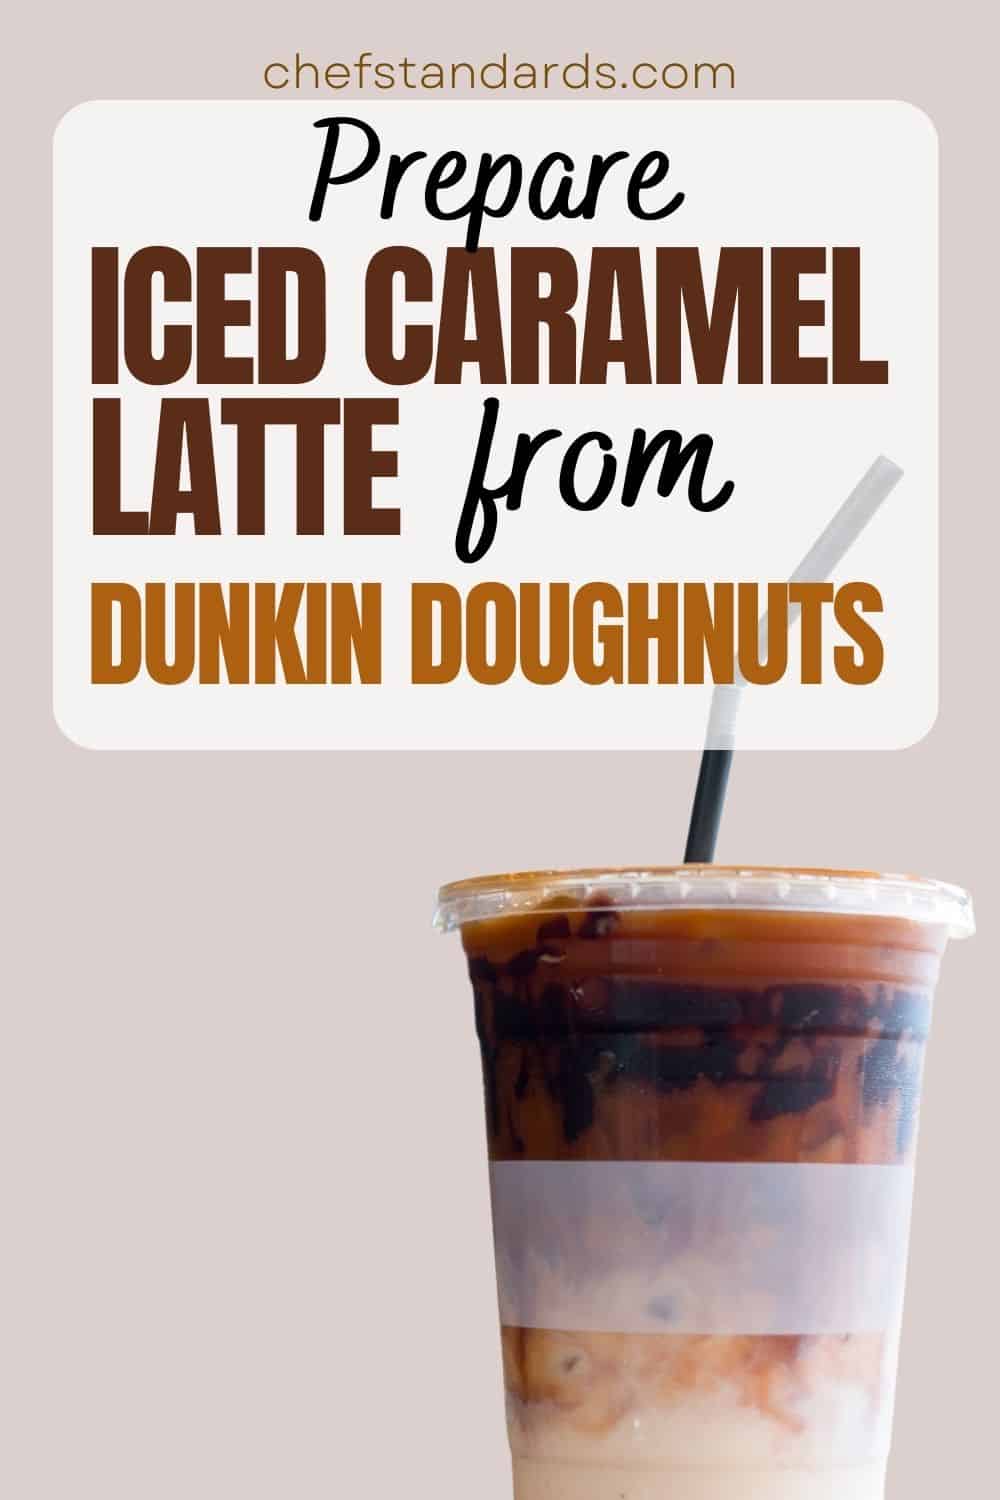 Recipe For Iced Caramel Latte Dunkin Doughnuts